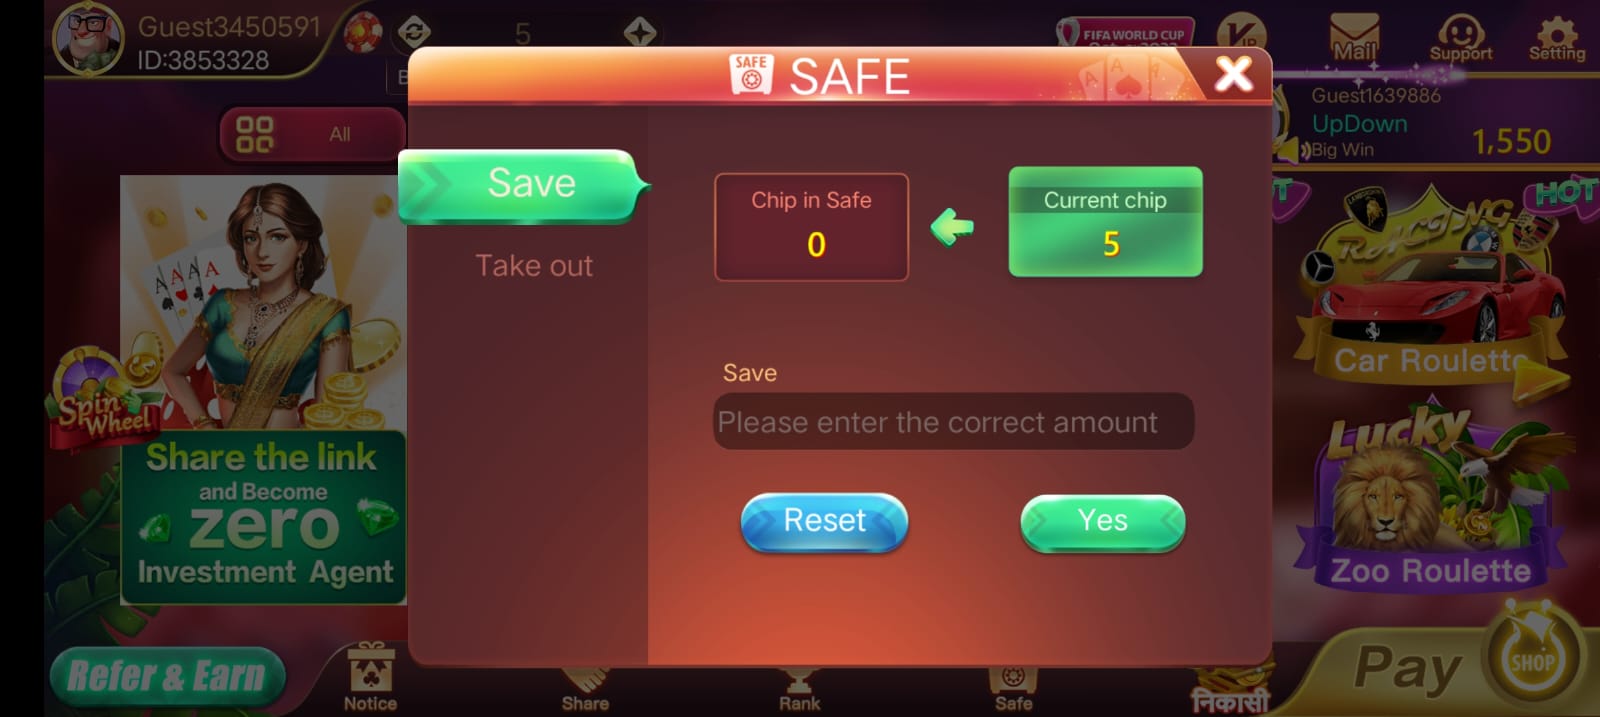 Safe Button Program In "Rummy East" App